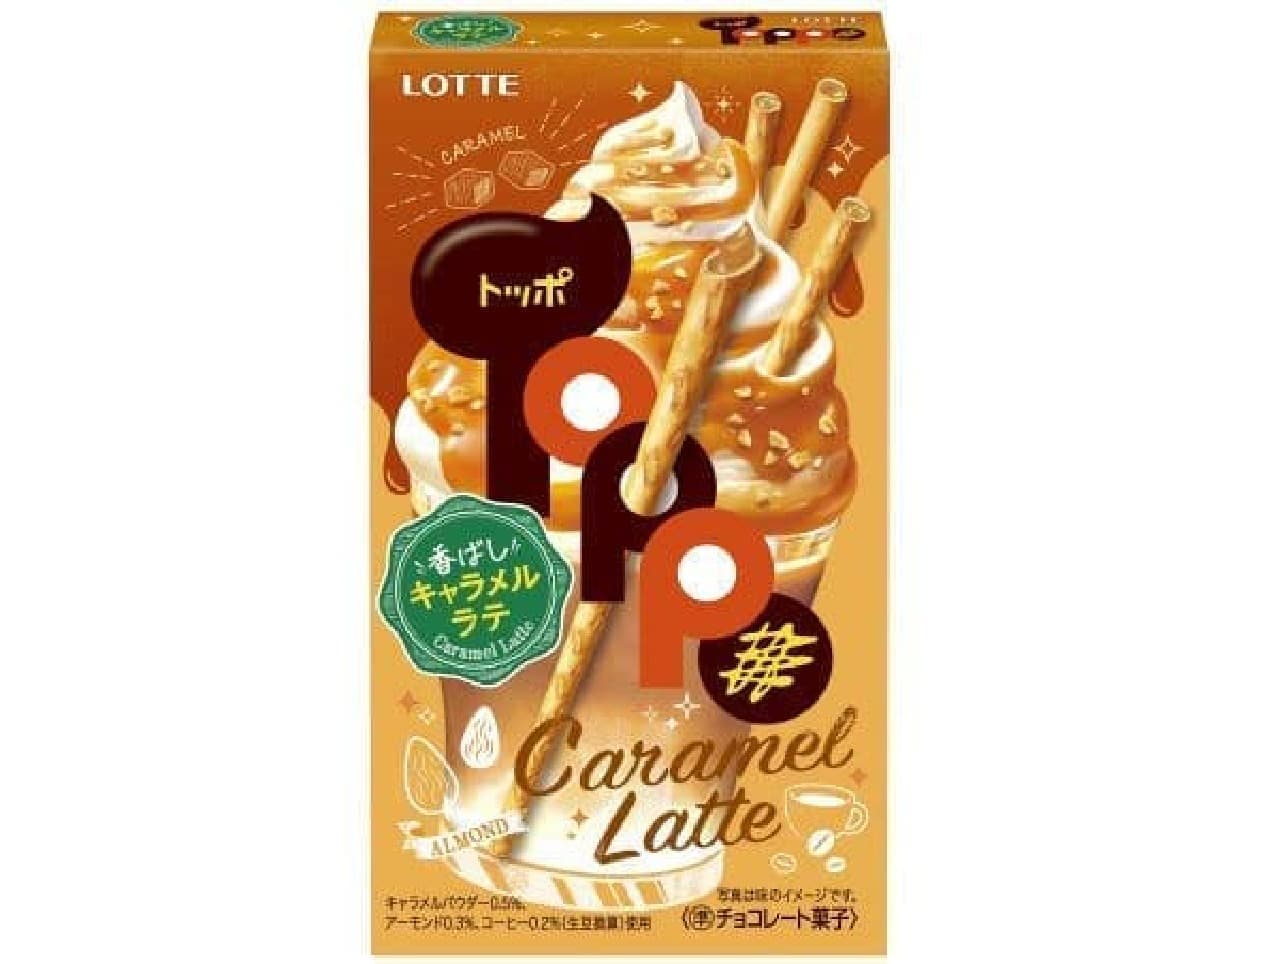 Lotte "Toppo [Scented Caramel Latte]".